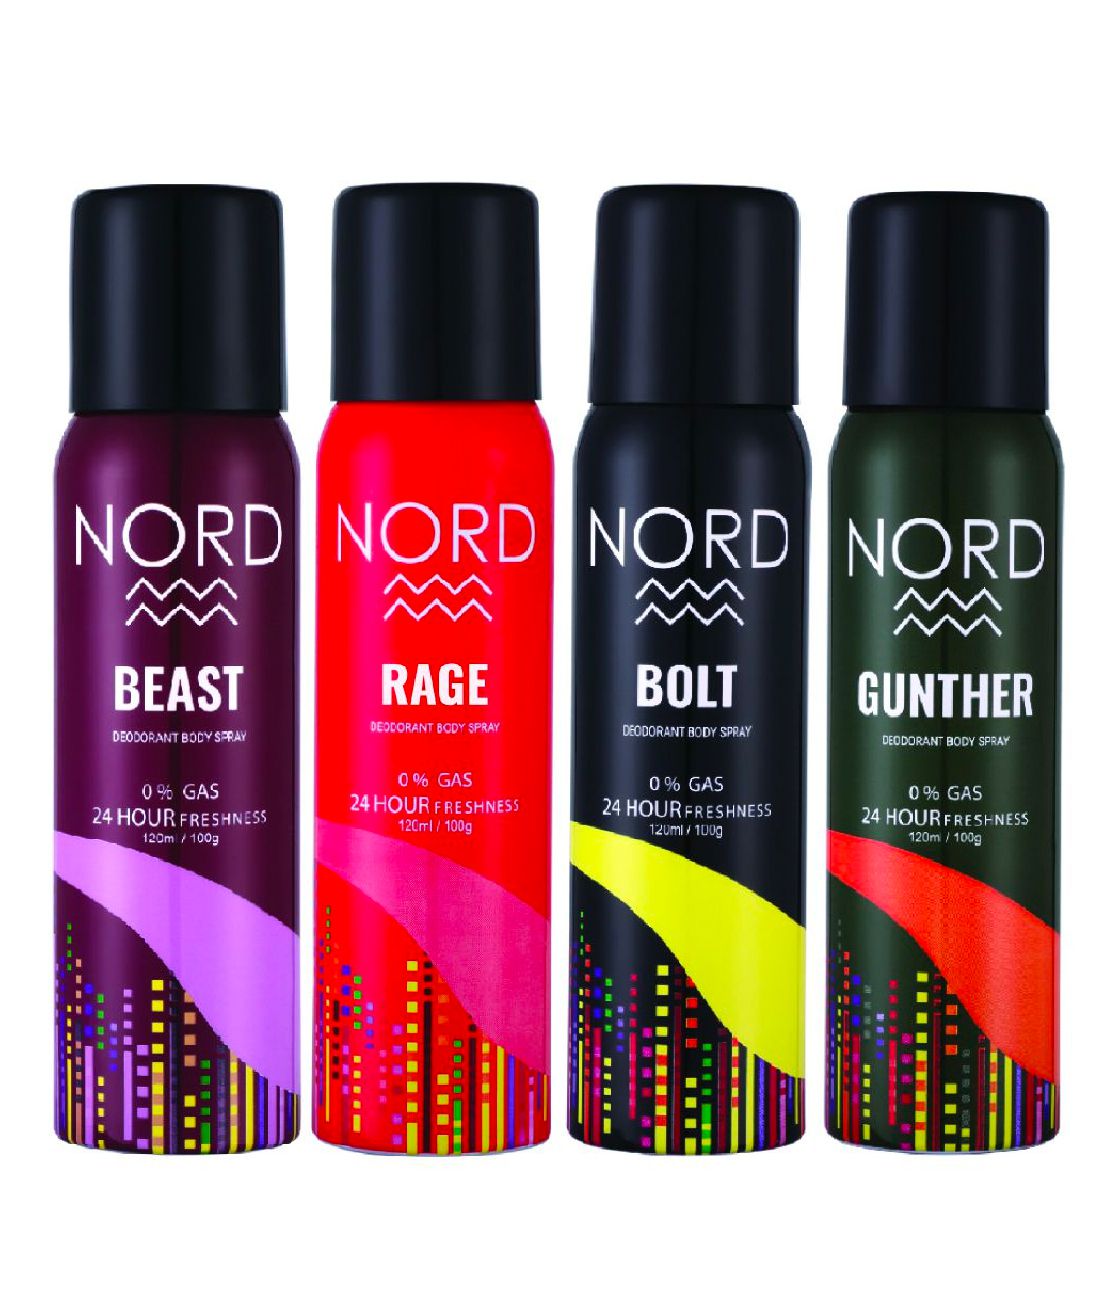     			NORD - Rage, Gunther, Bolt, Beast Perfume Body Spray for Men 120 ml Each ( Pack of 4 )